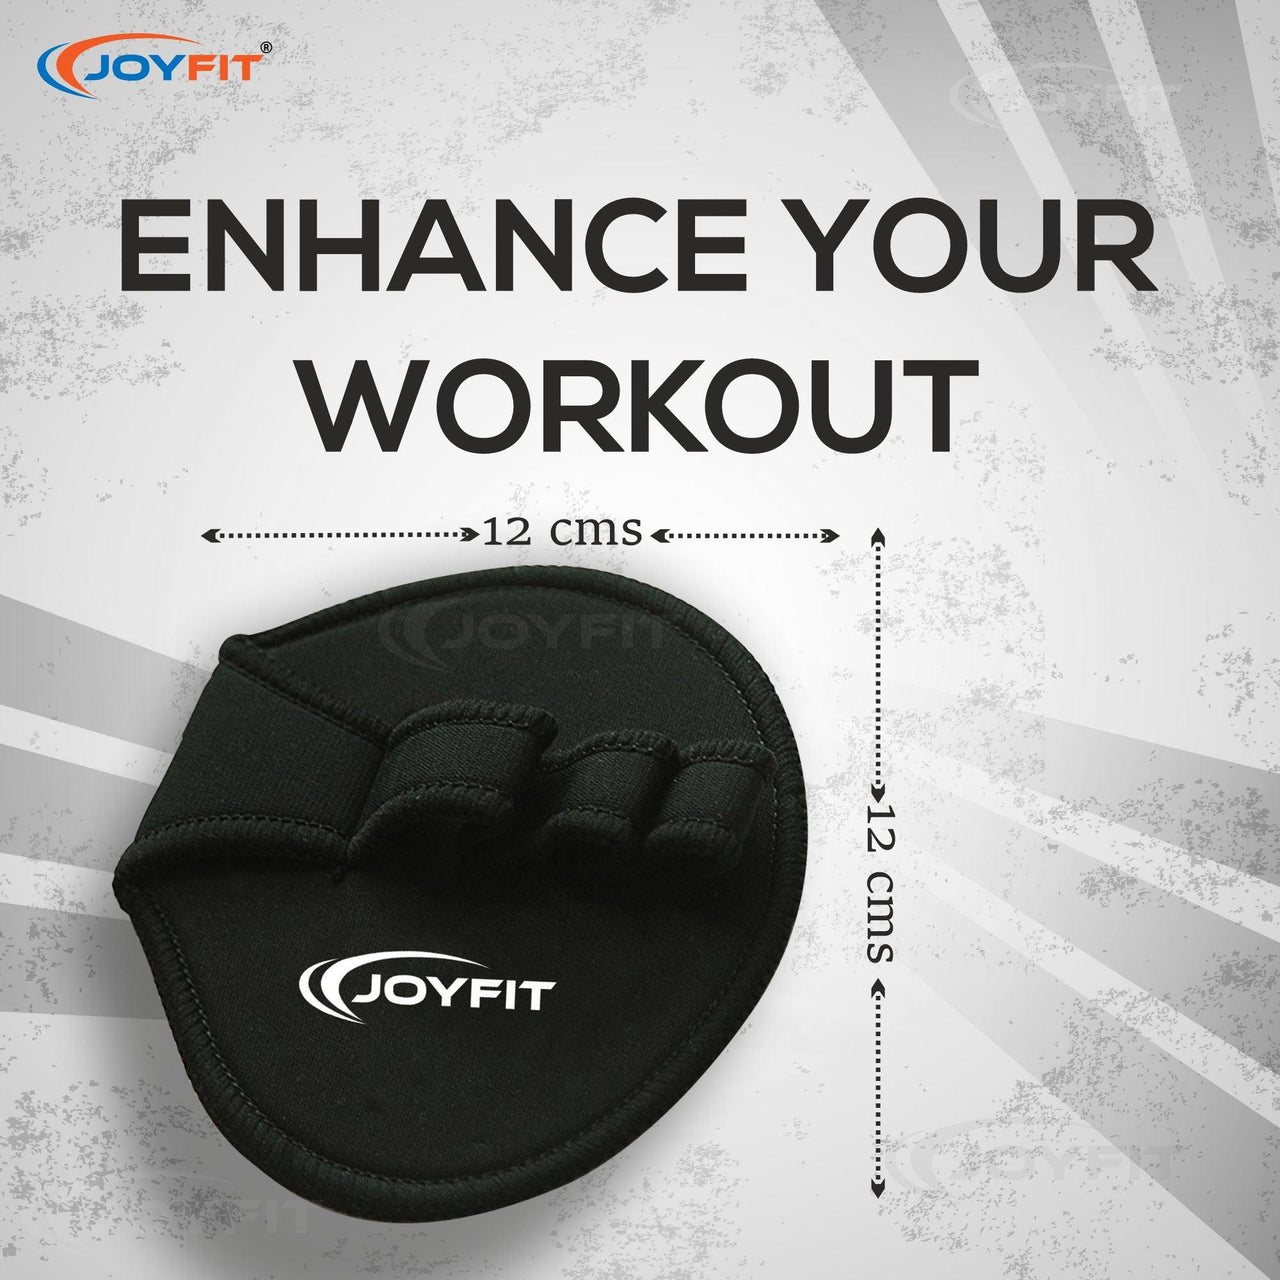 Gym Grip for Weightlifting (Black) - Joyfit